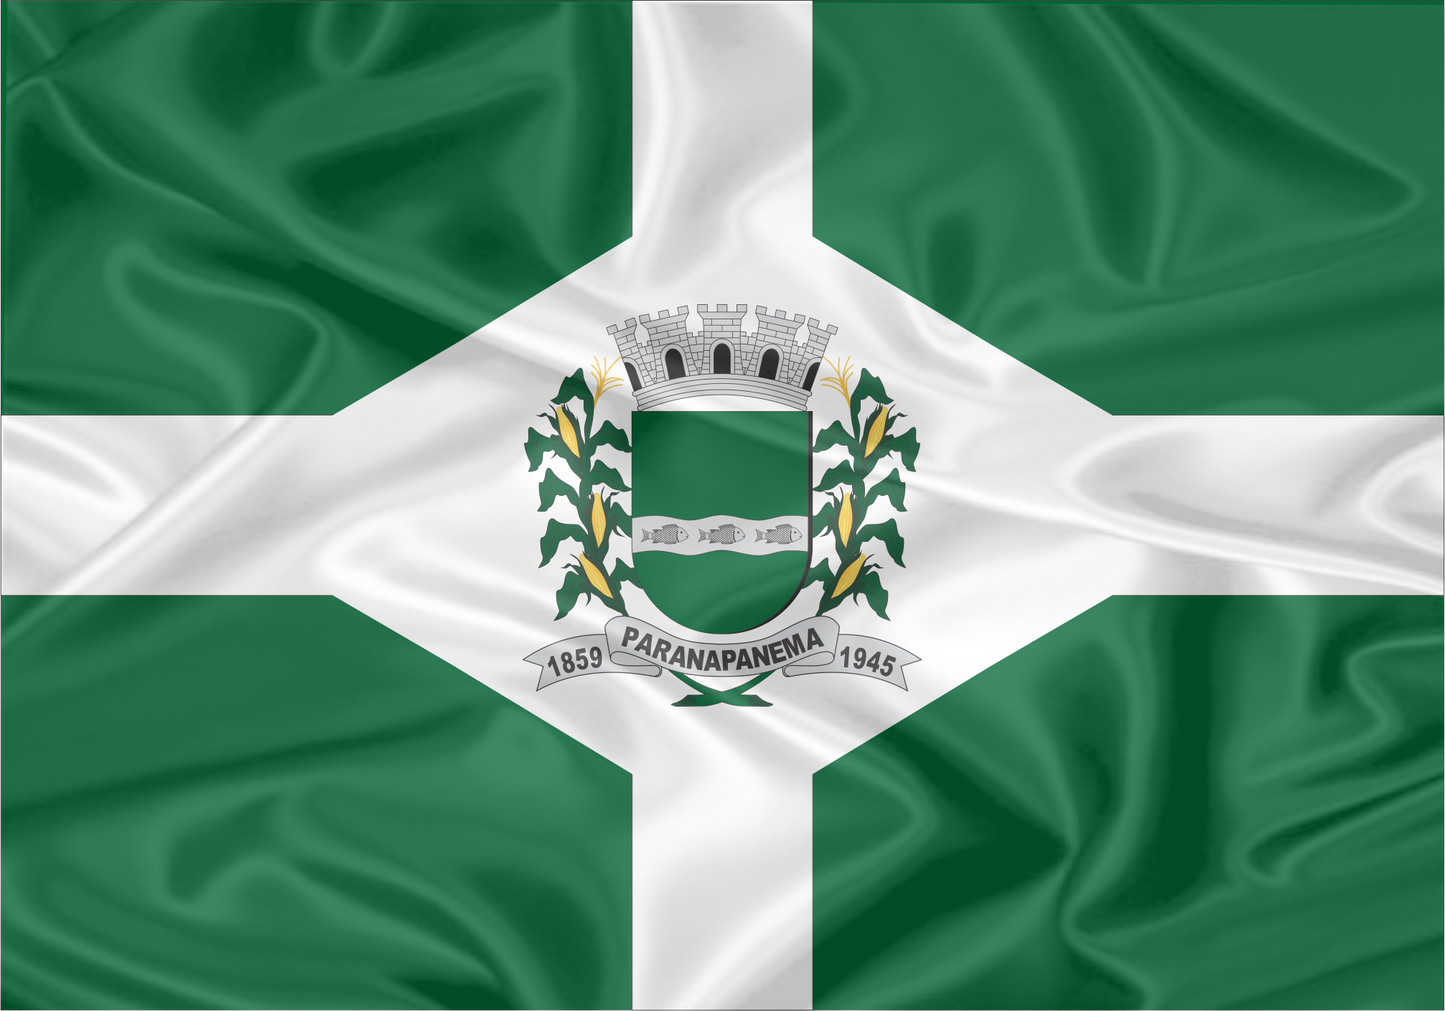 Imagem da Bandeira Paranapanema